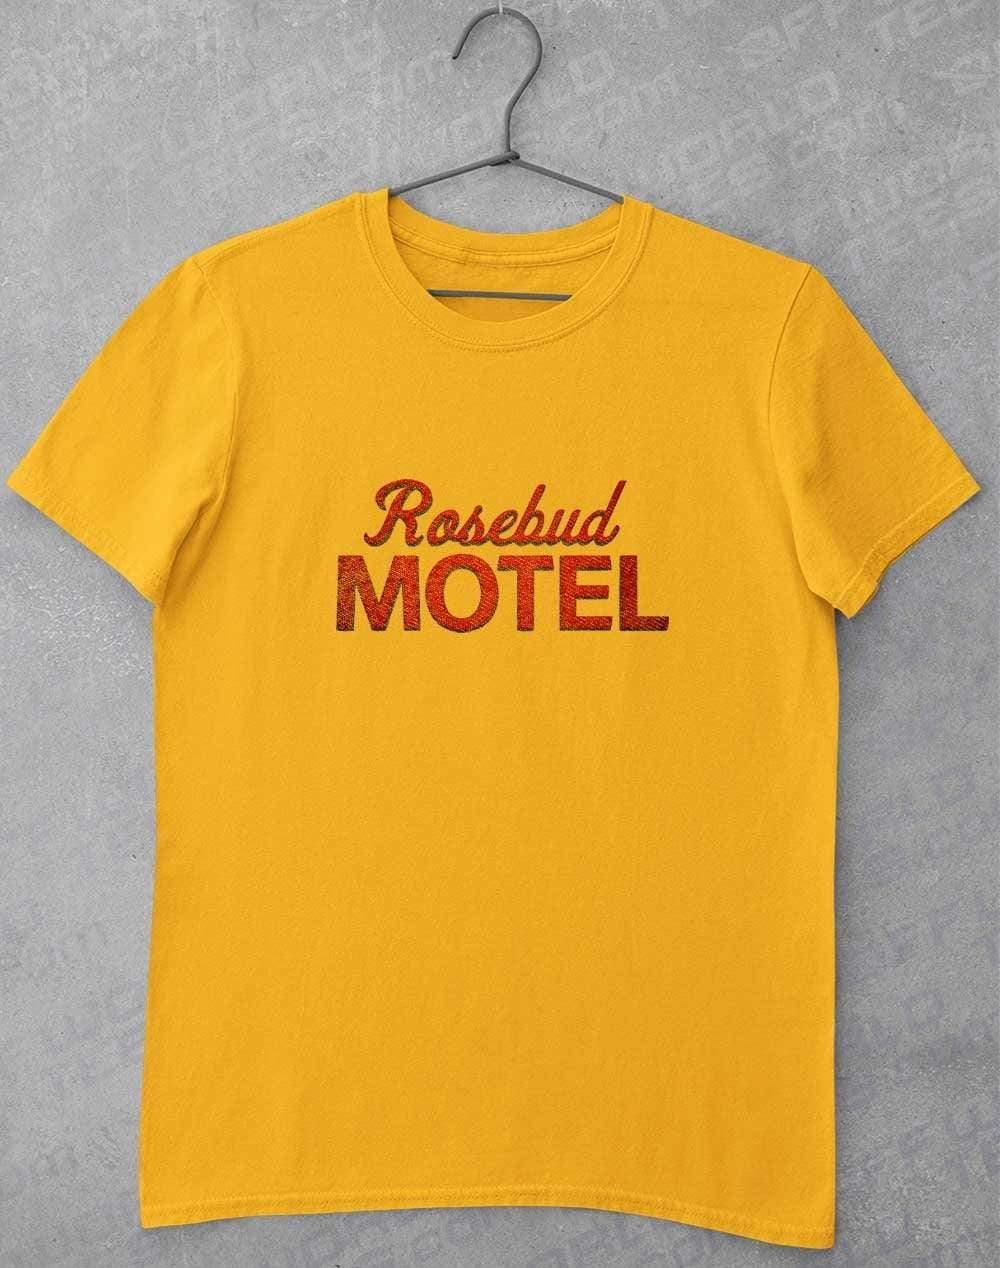 Rosebud Motel T-Shirt S / Gold  - Off World Tees